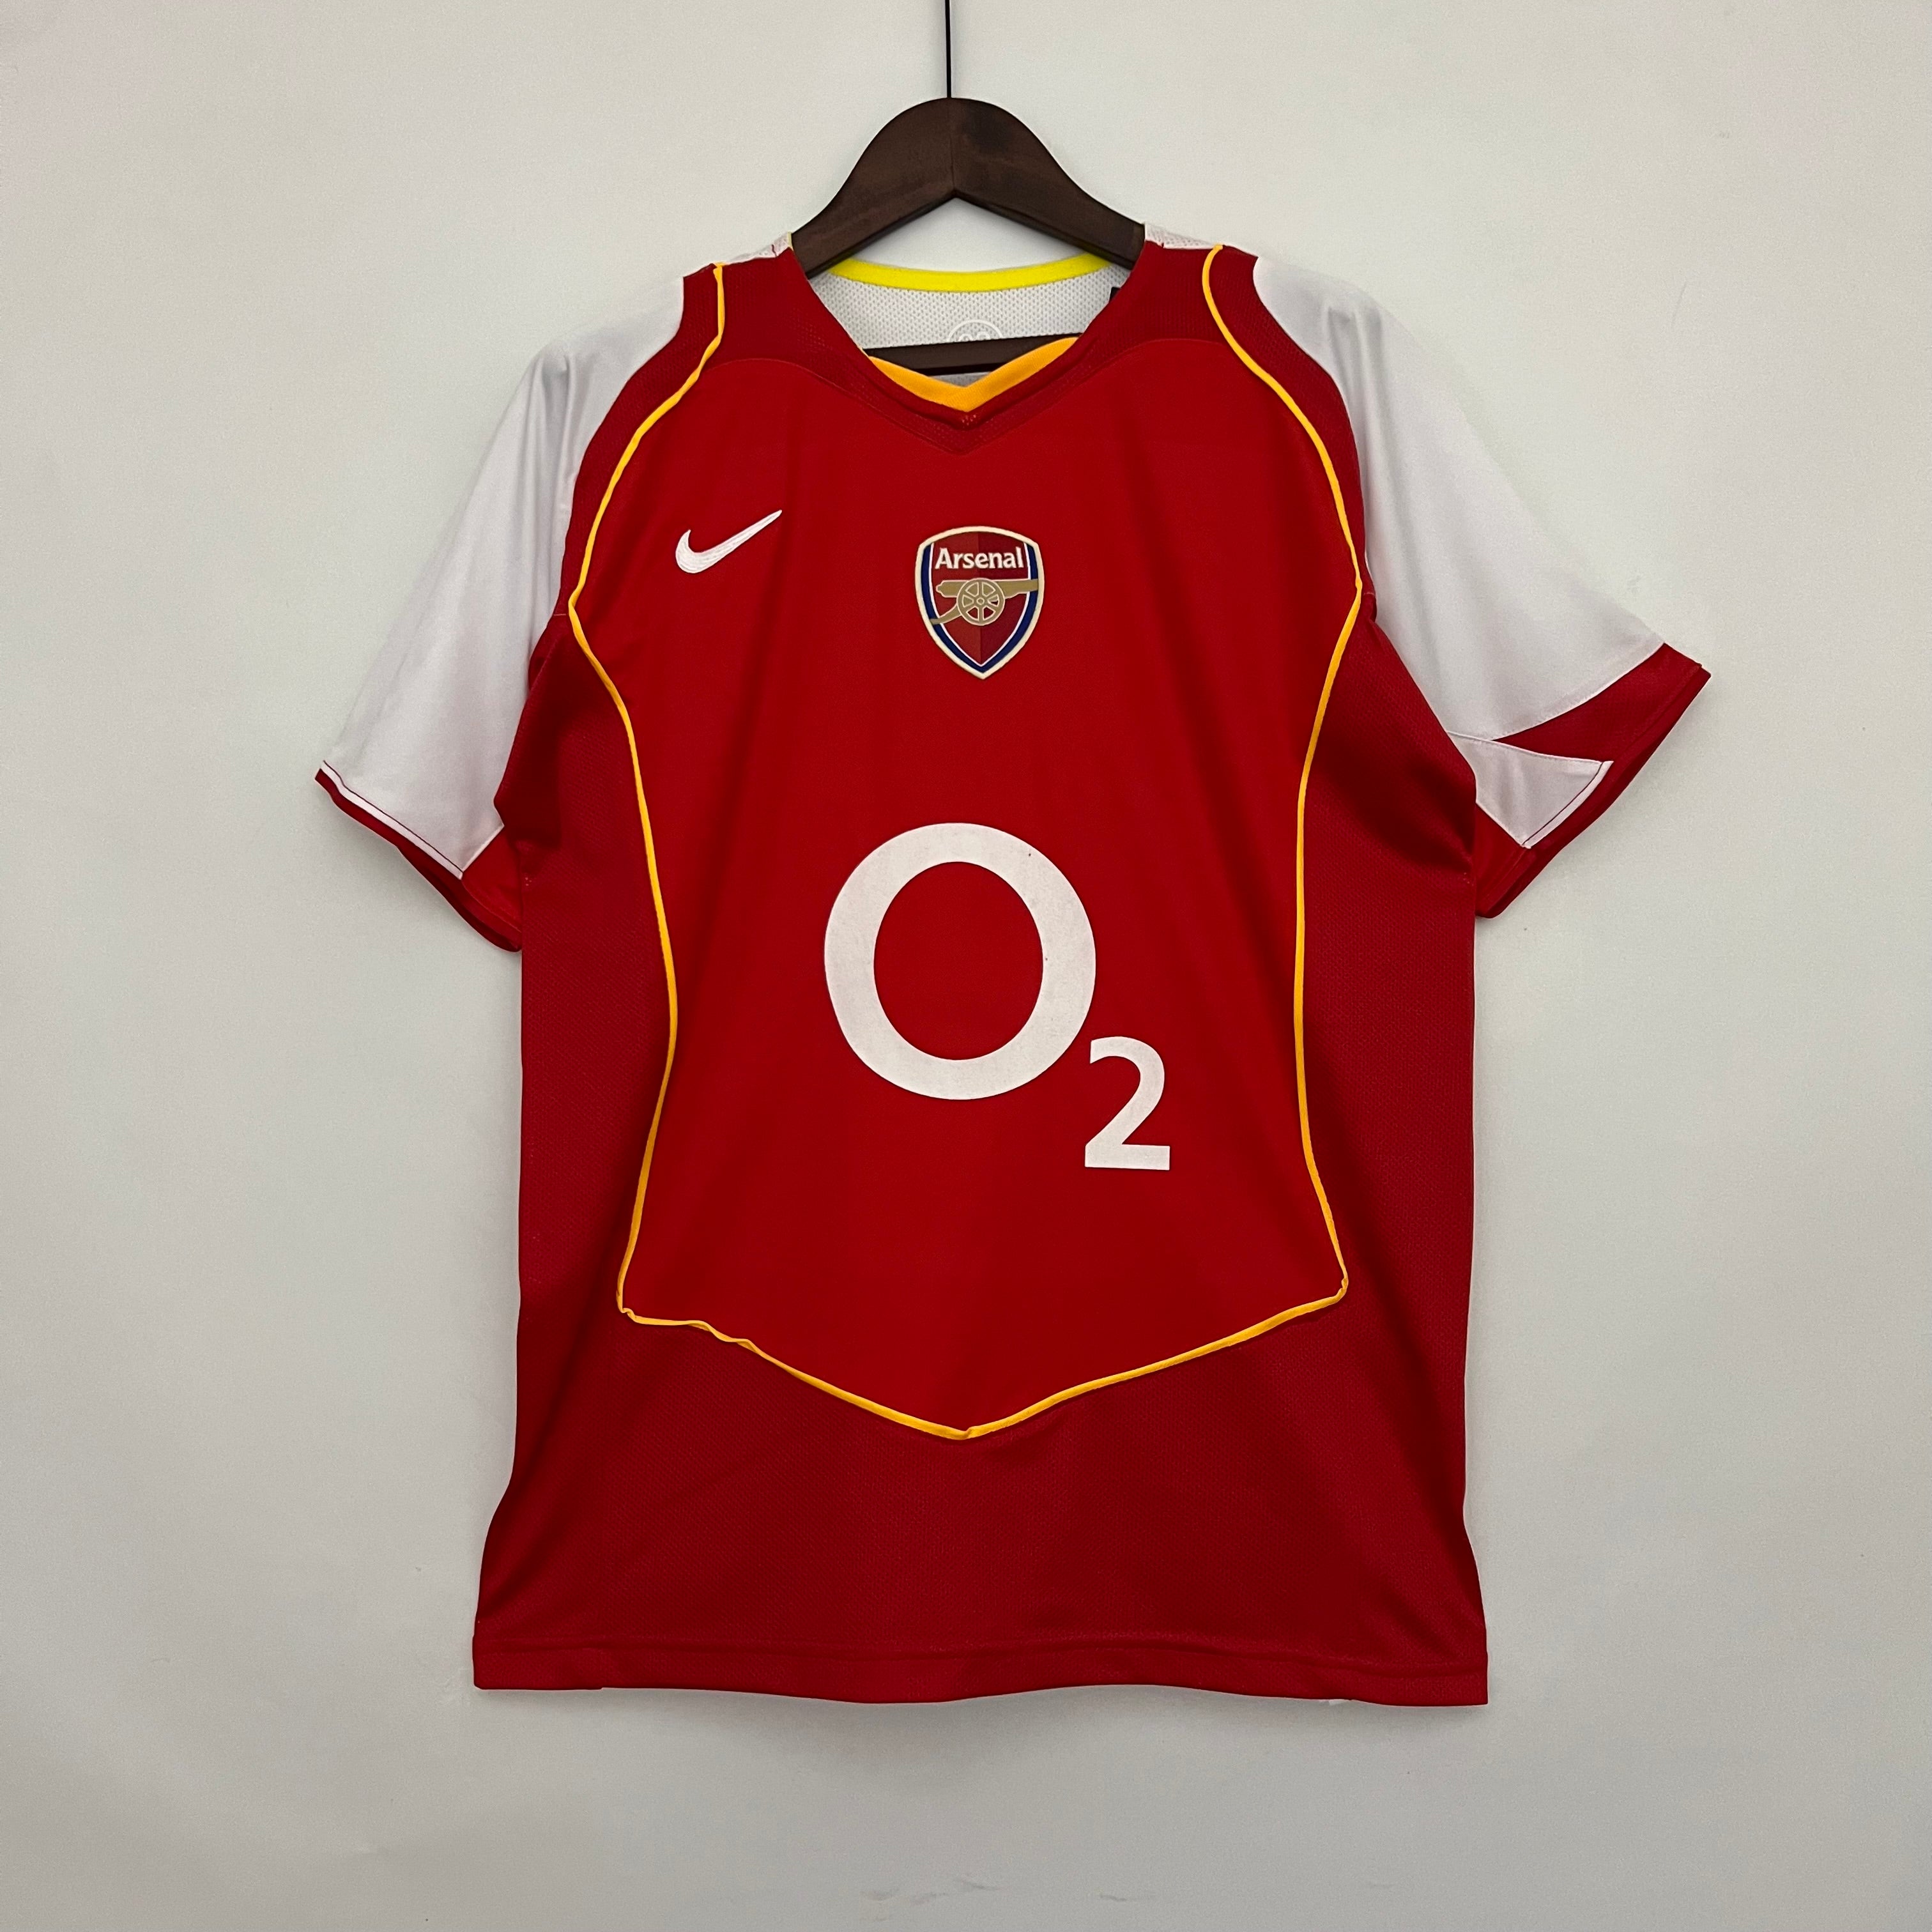 Arsenal - 04/05 Vintage